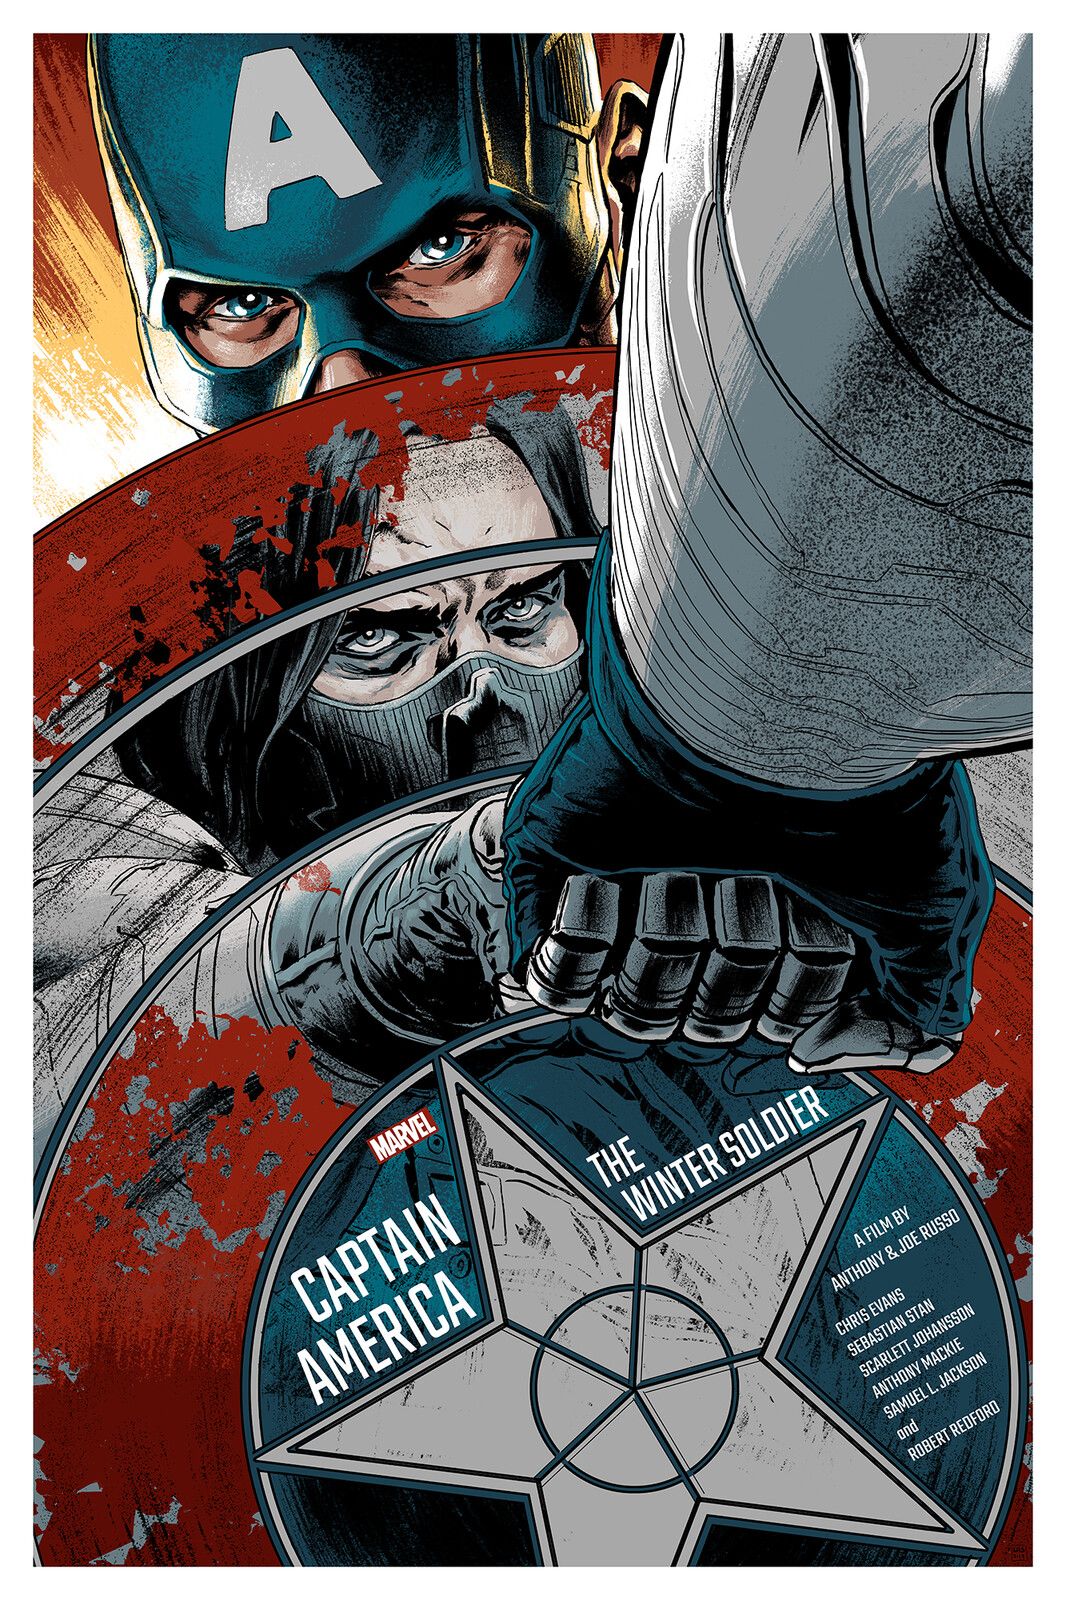 Captain America: The Winter Soldier, Henrik Sahlstrom